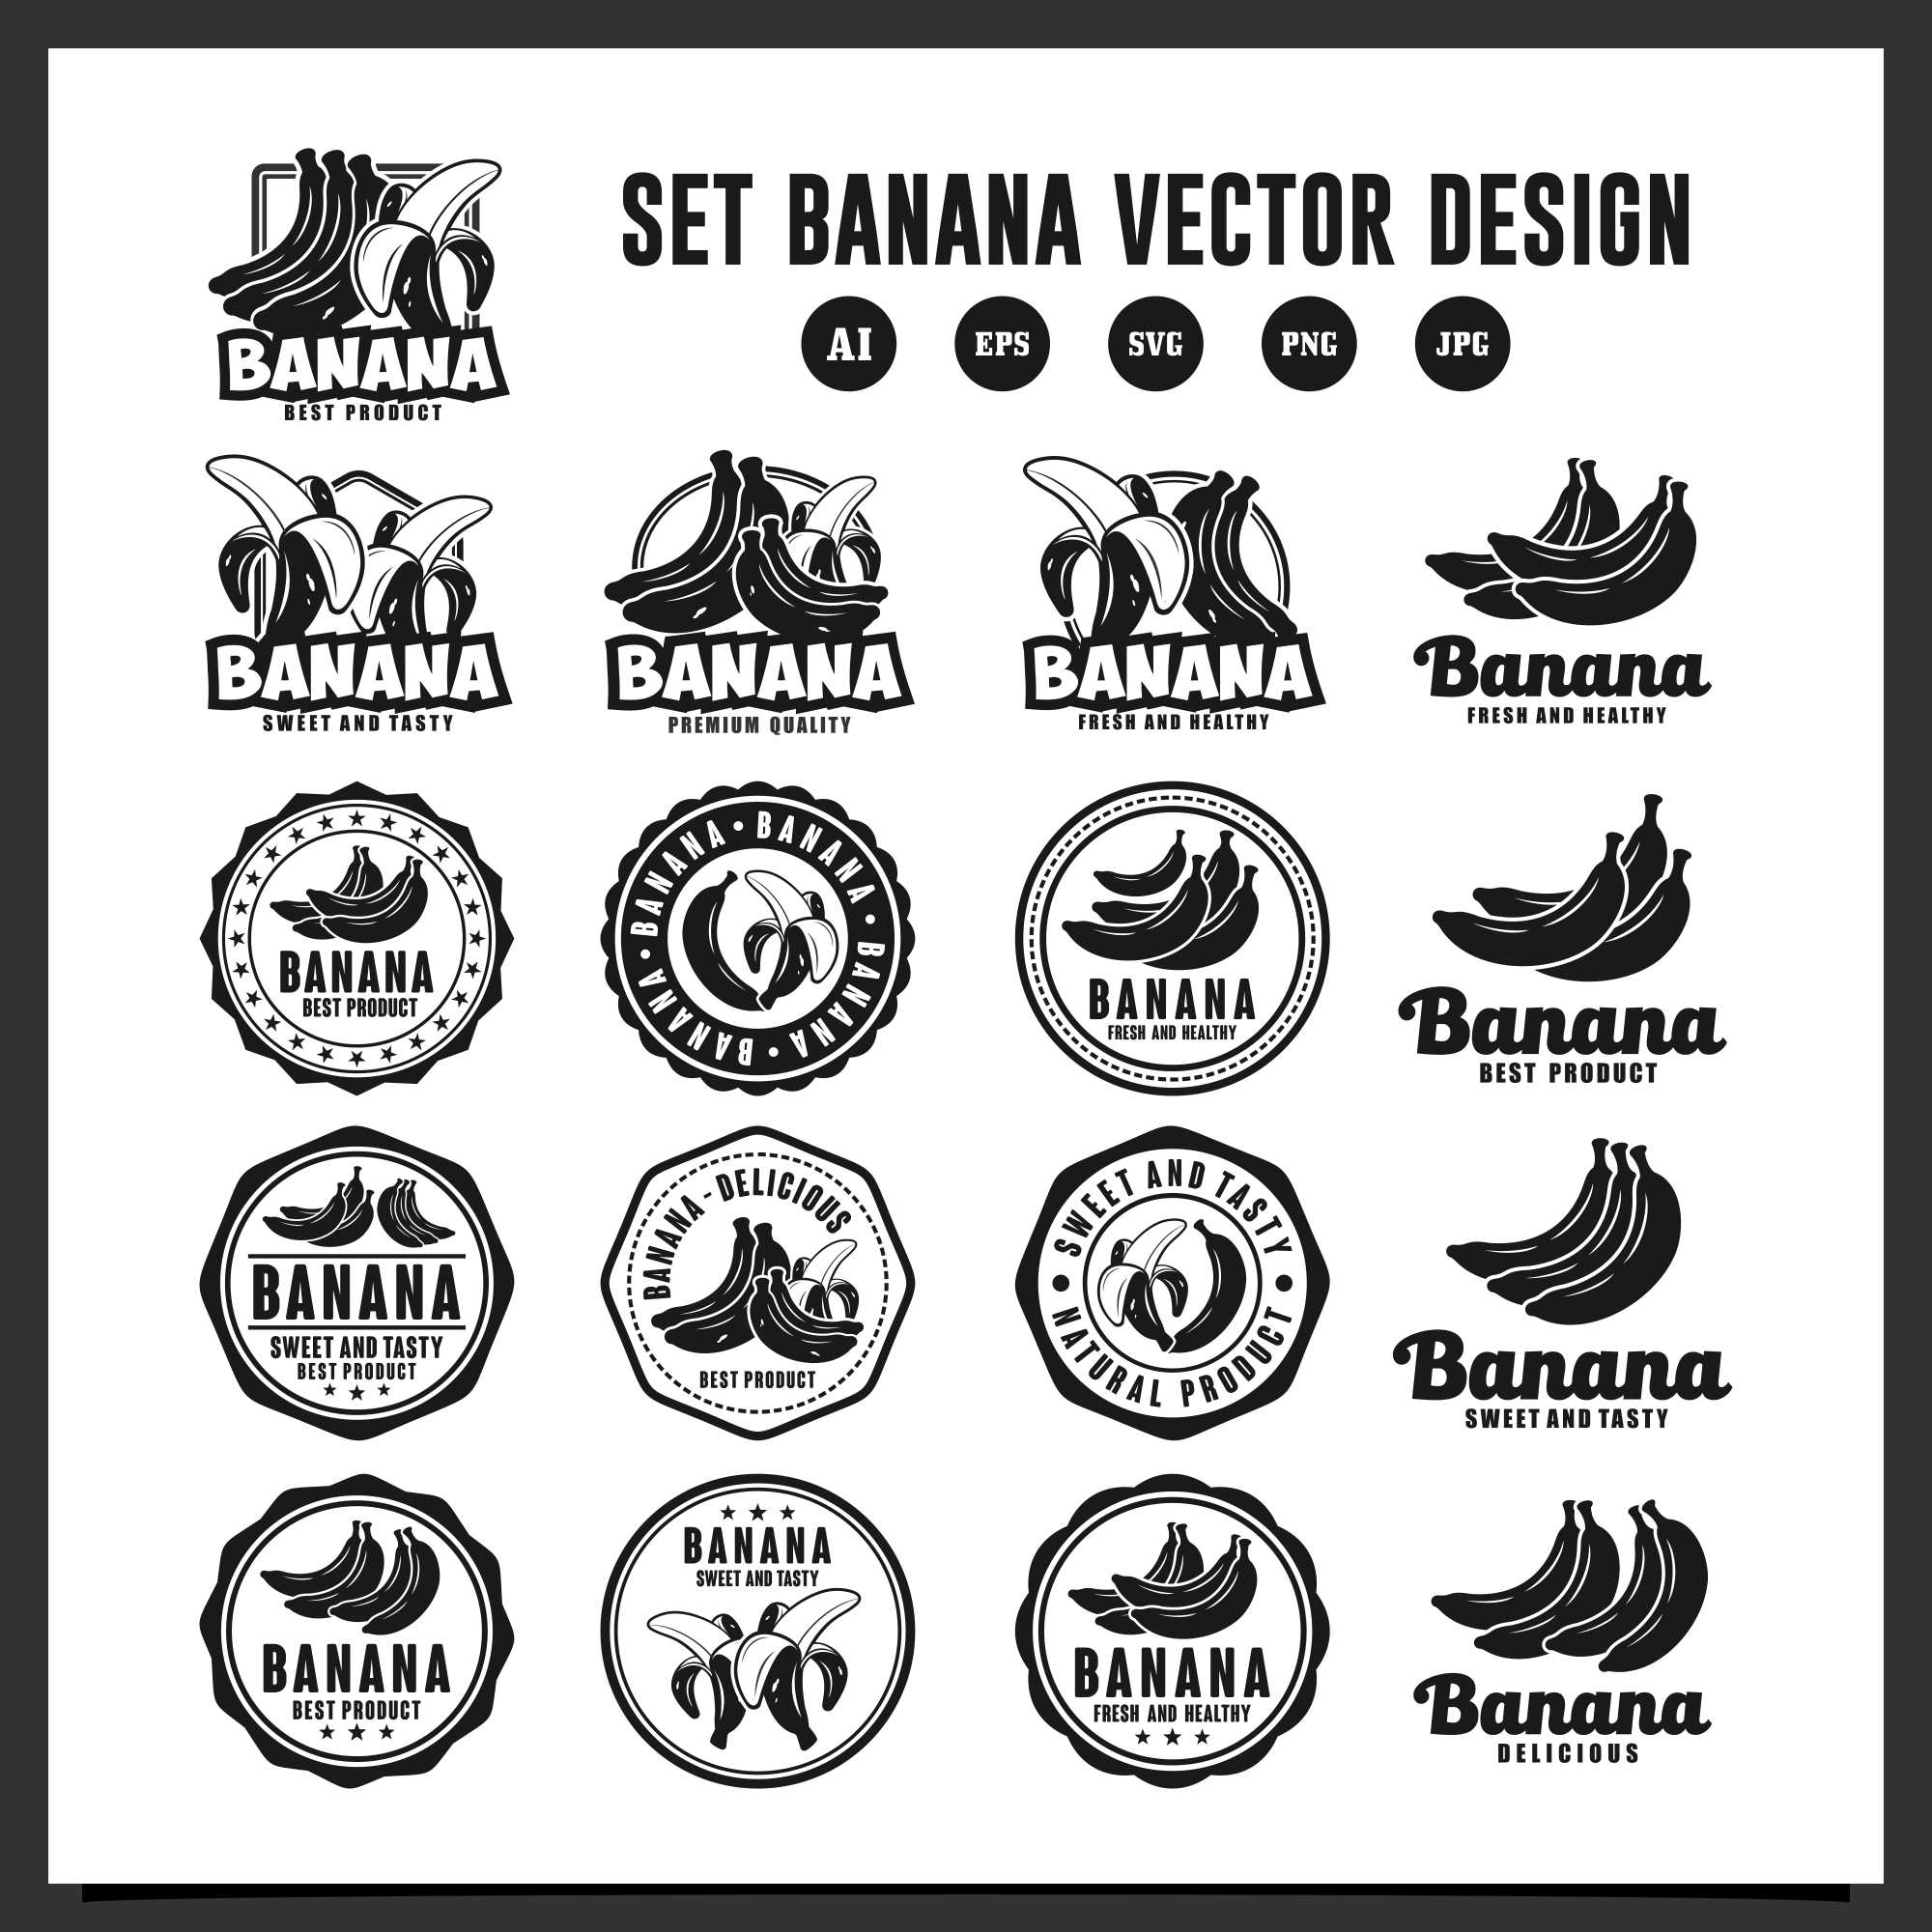 Set Banana vector design collection - $8 cover image.